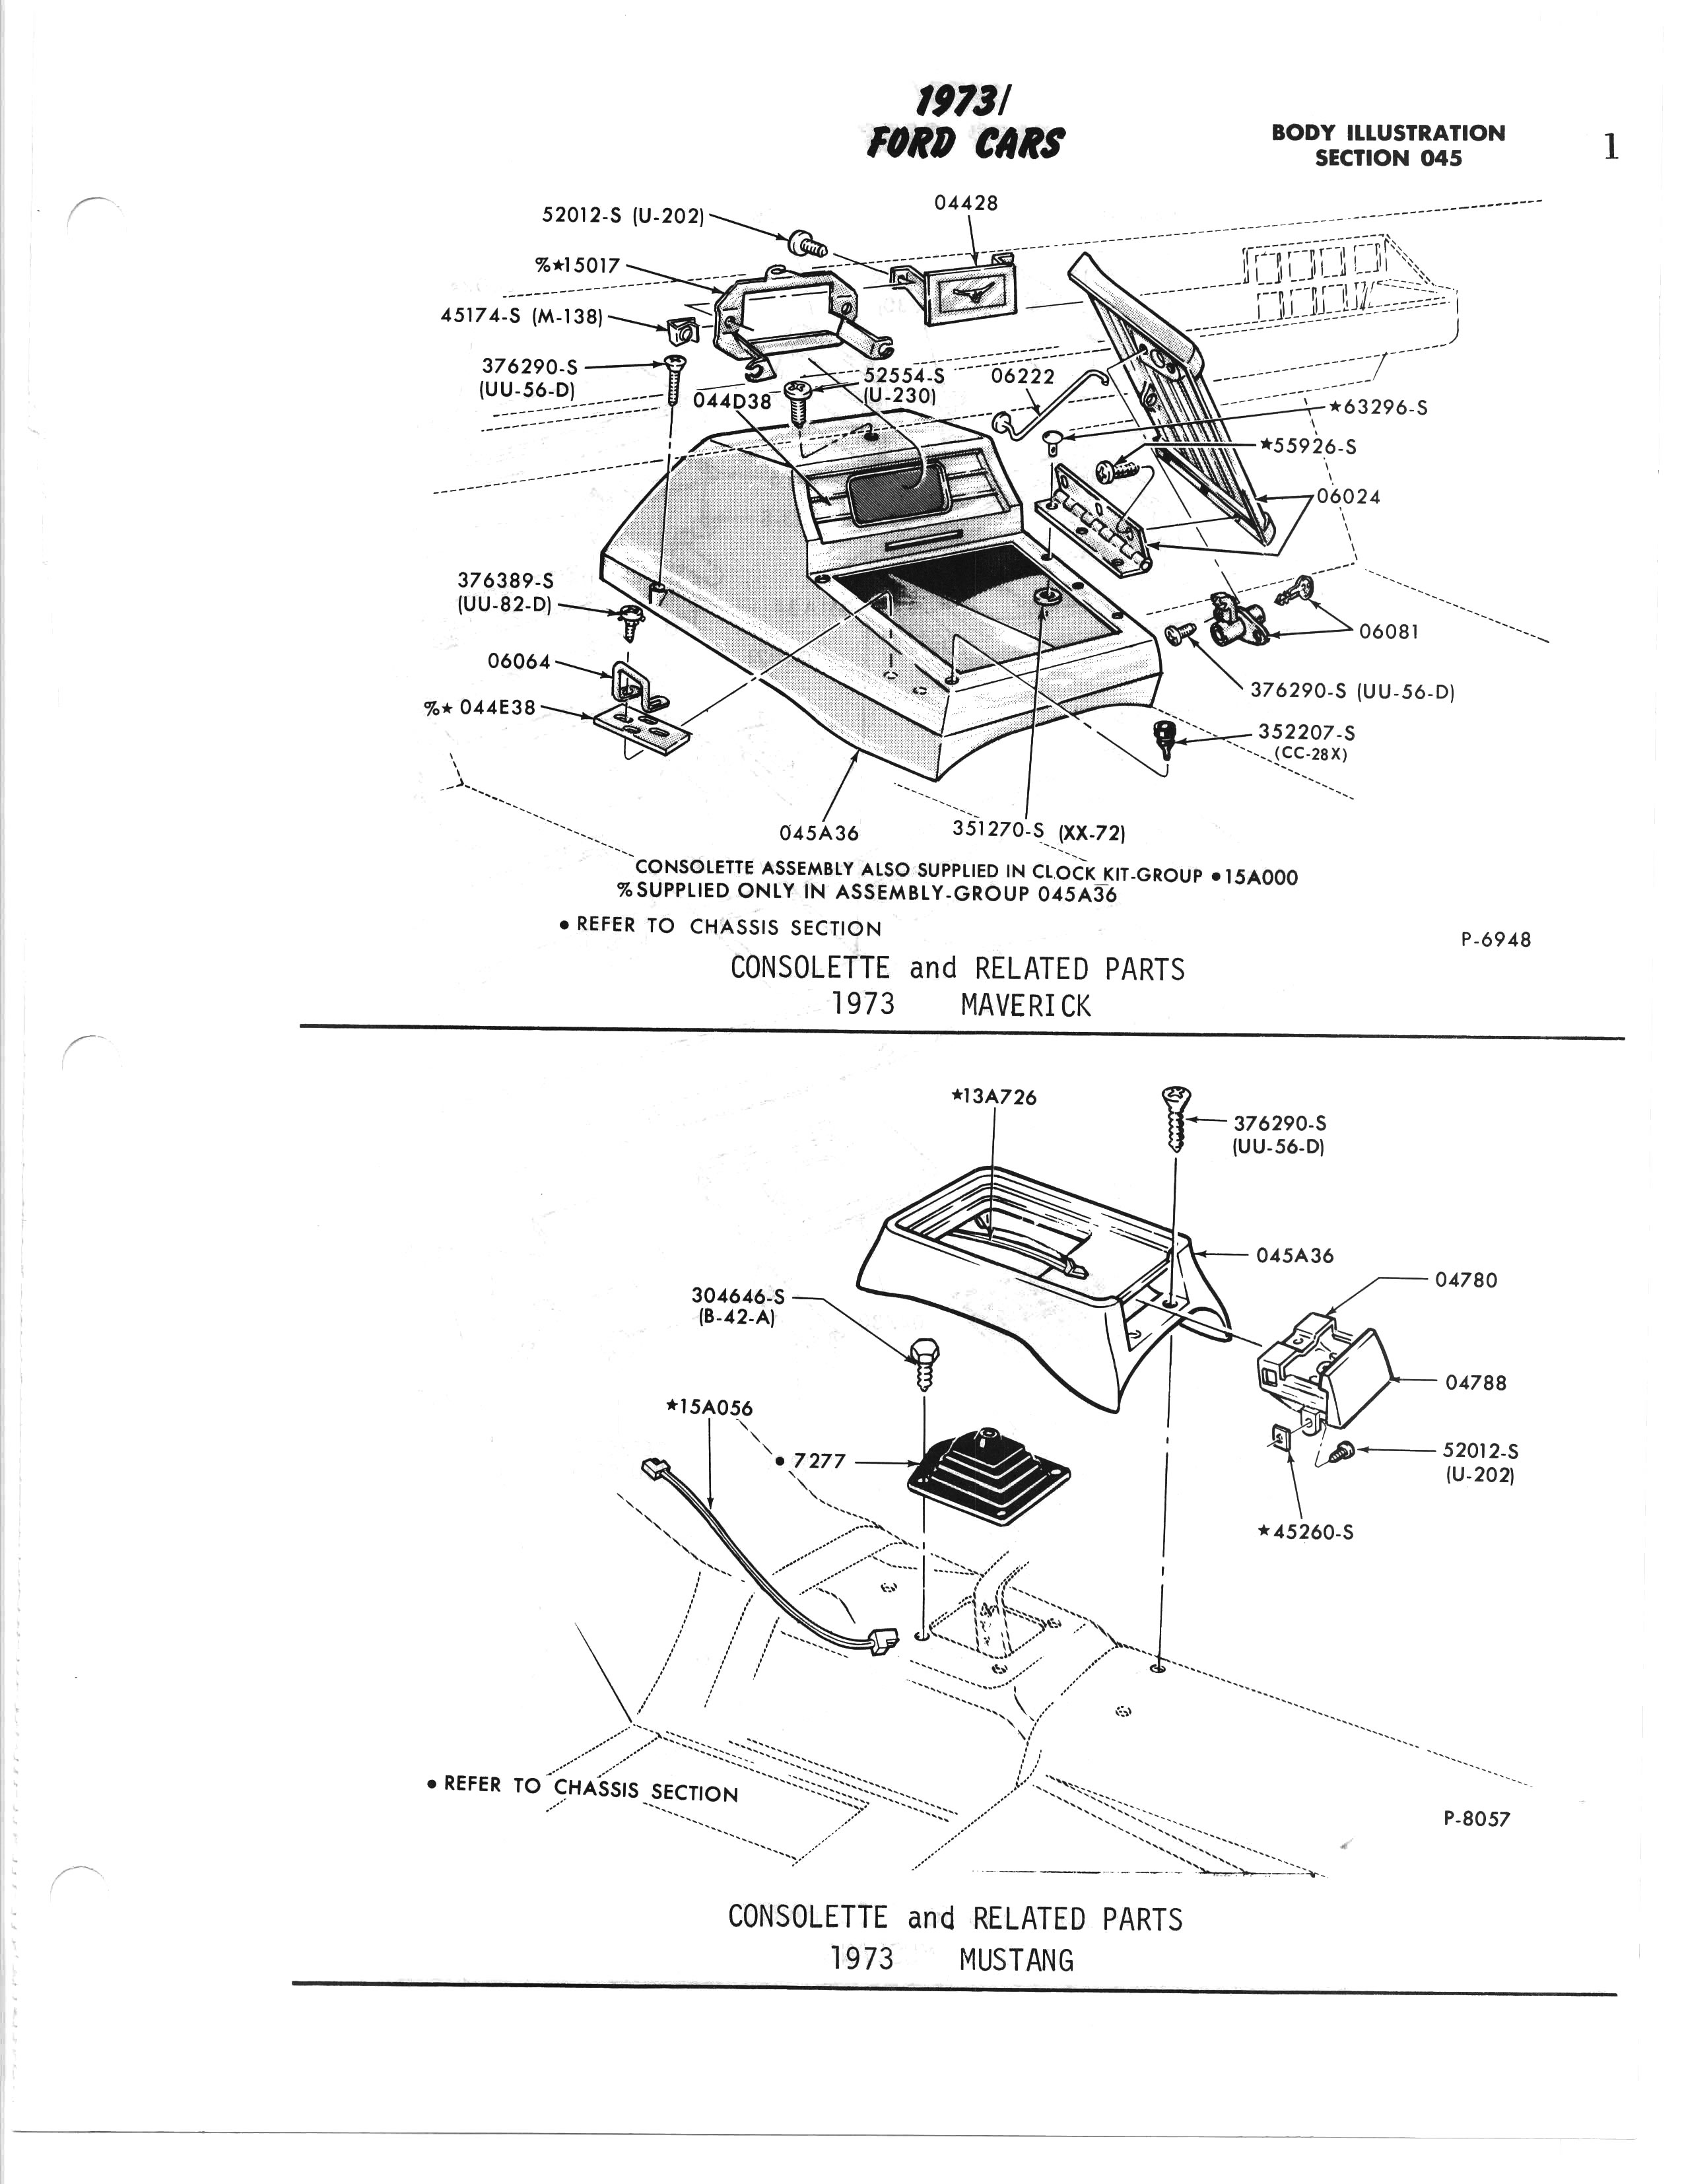 1973 Ford Parts Illustrations - Section 000 / Ford1973V2pix0556.jpg